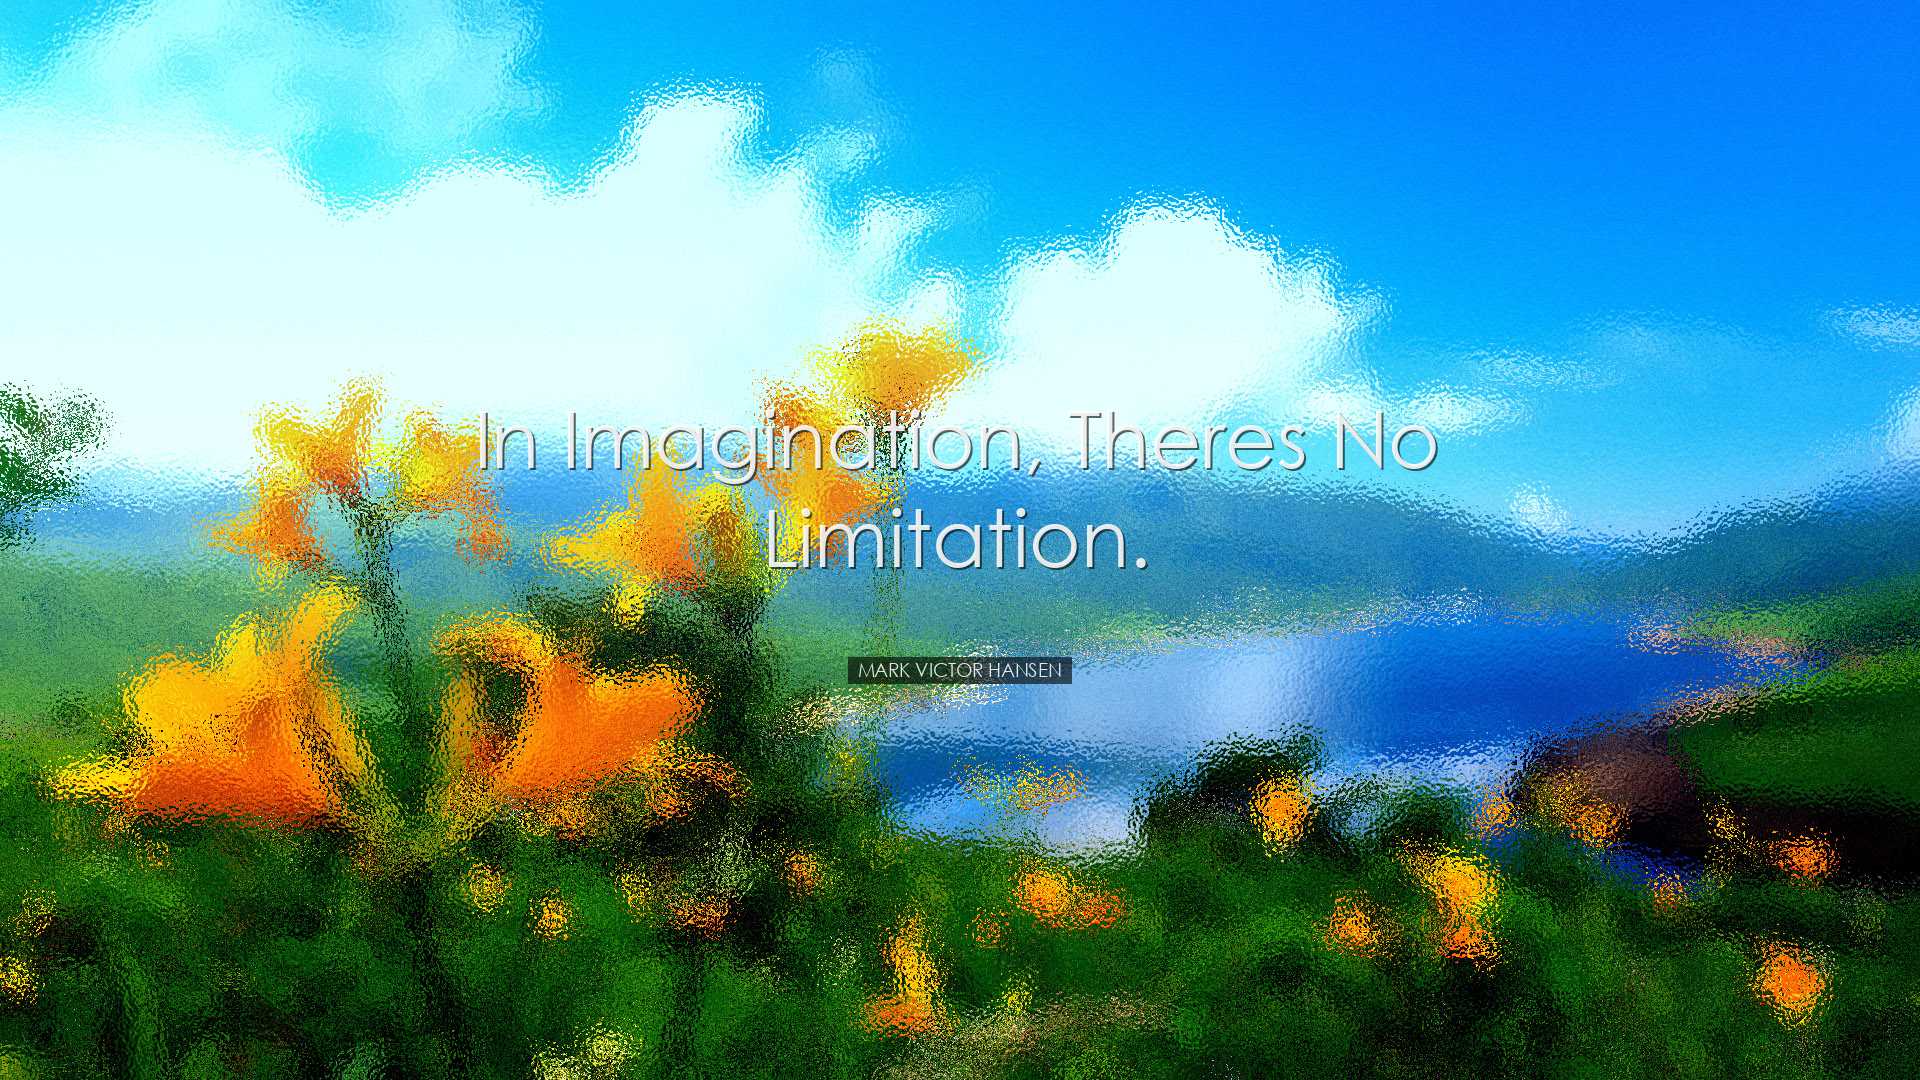 In imagination, theres no limitation. - Mark Victor Hansen